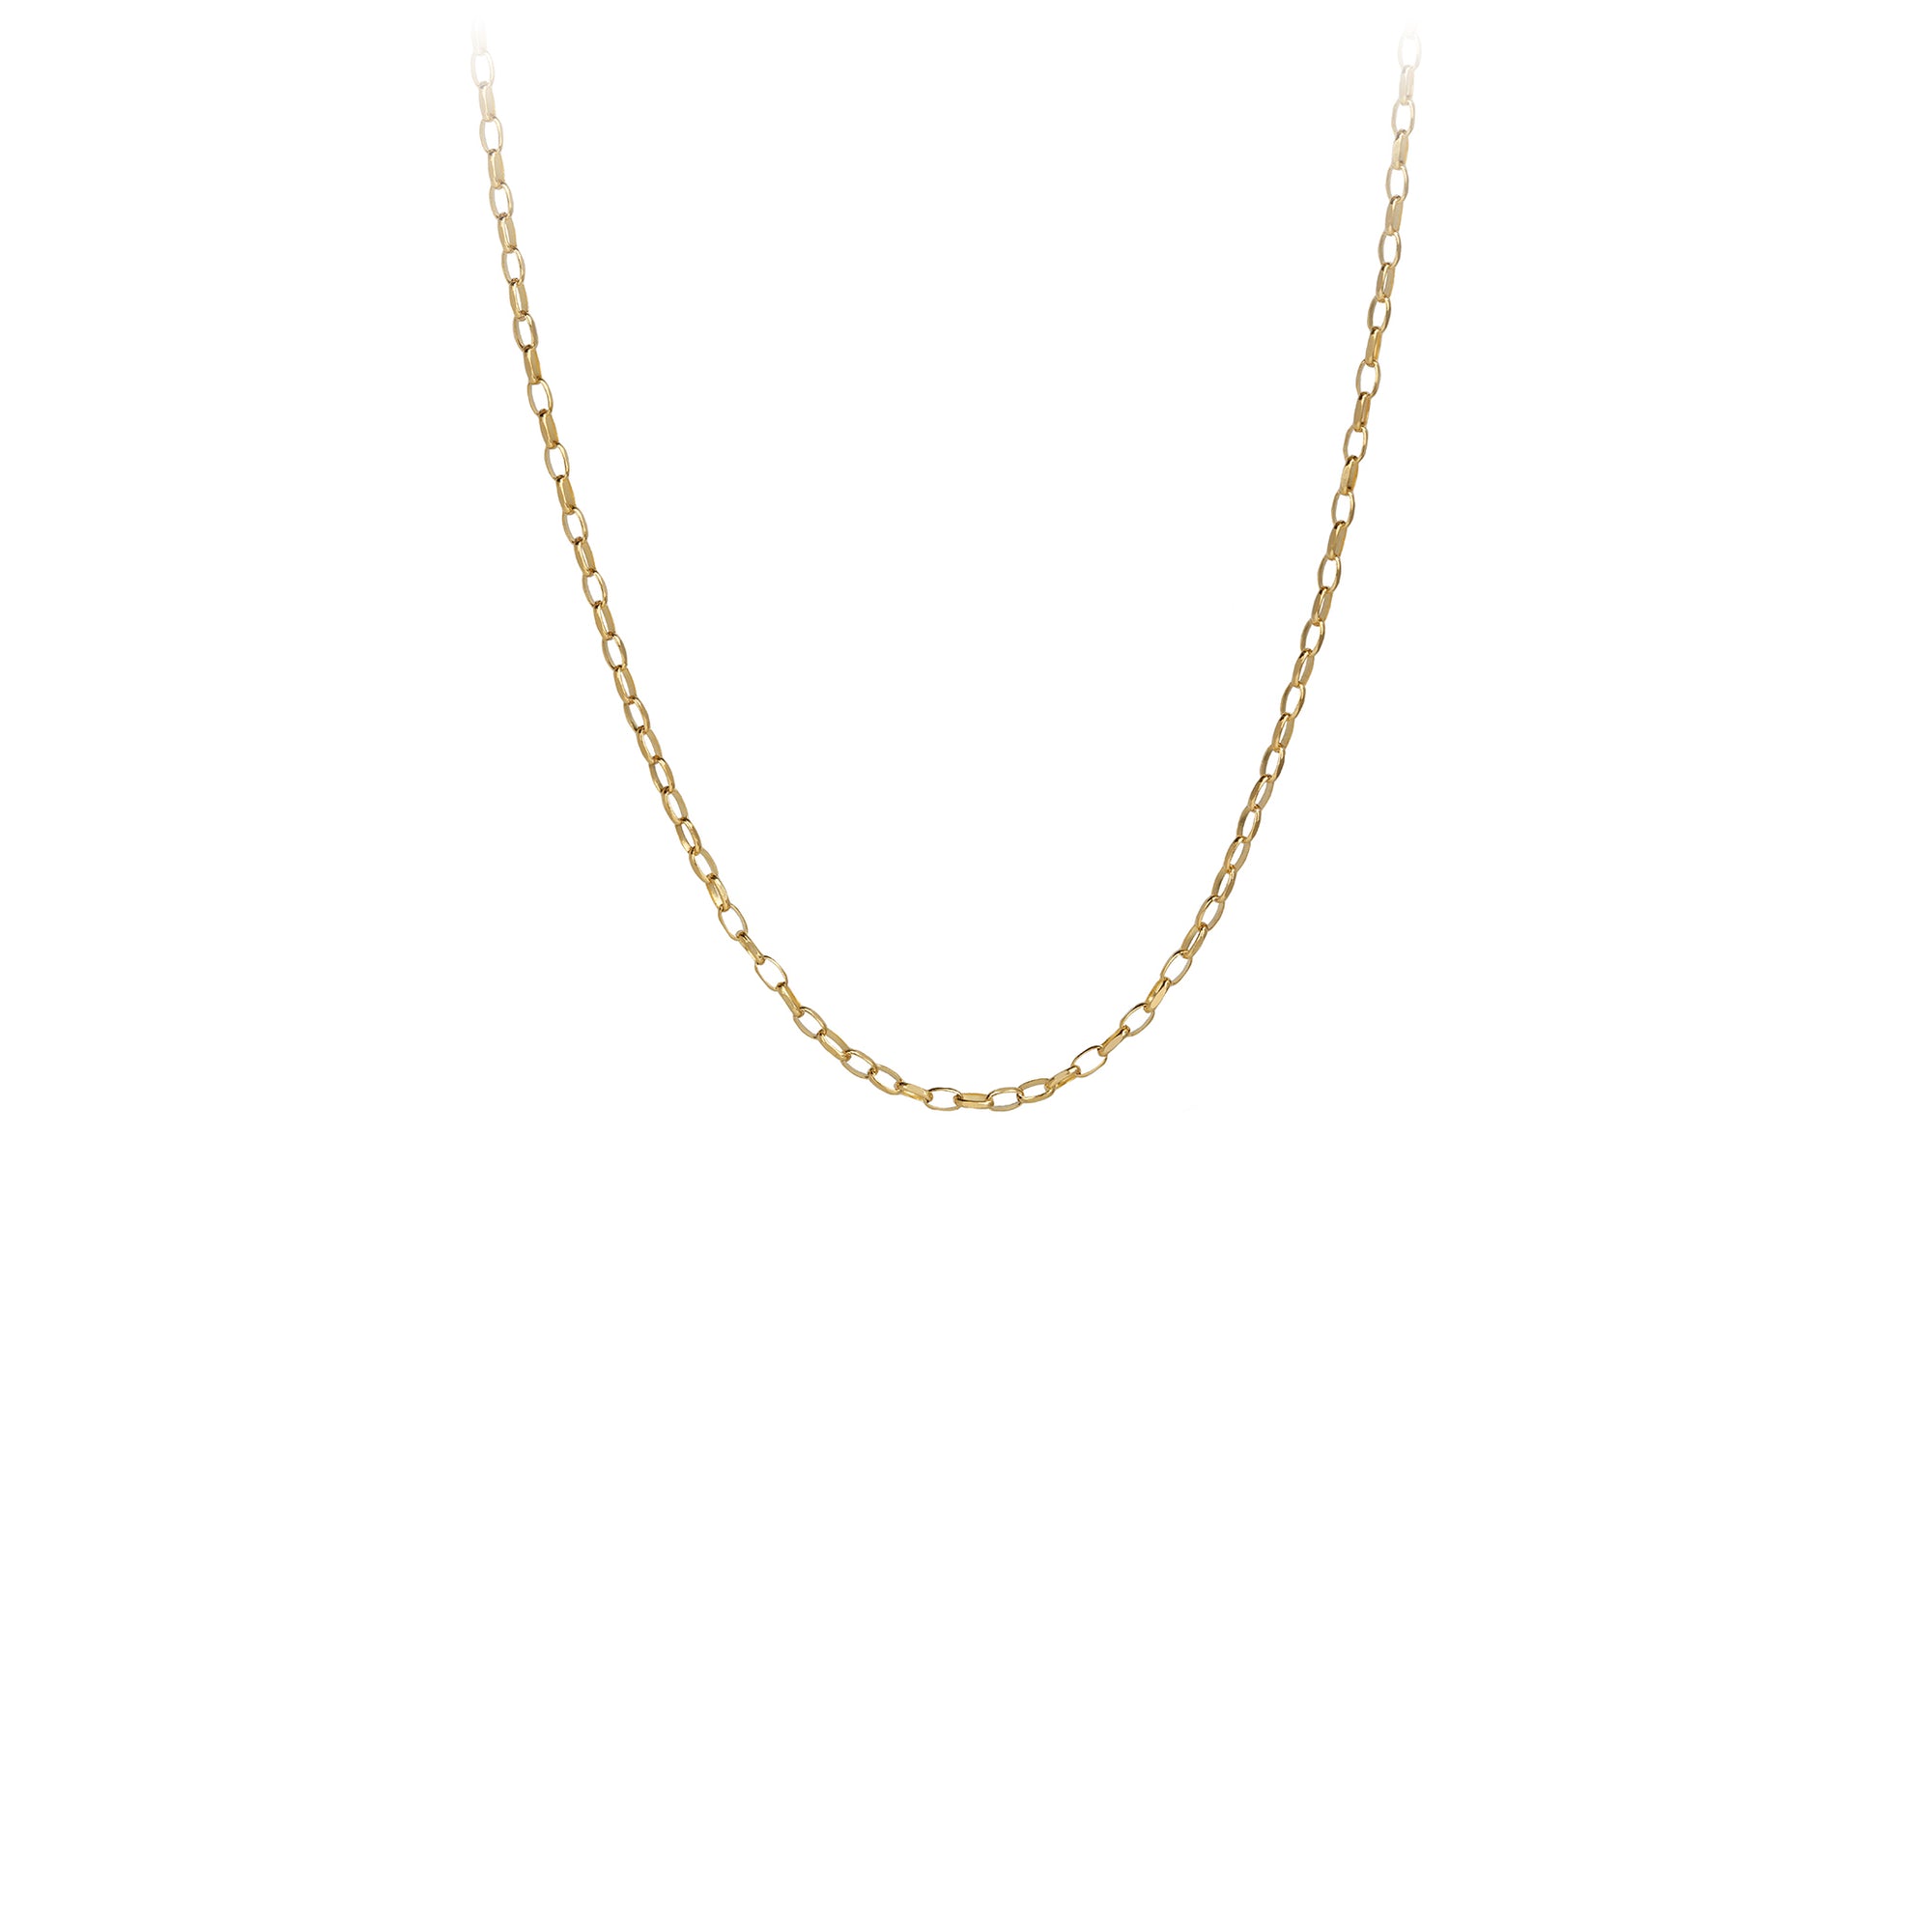 A 14 karat gold chain with baby belcher links